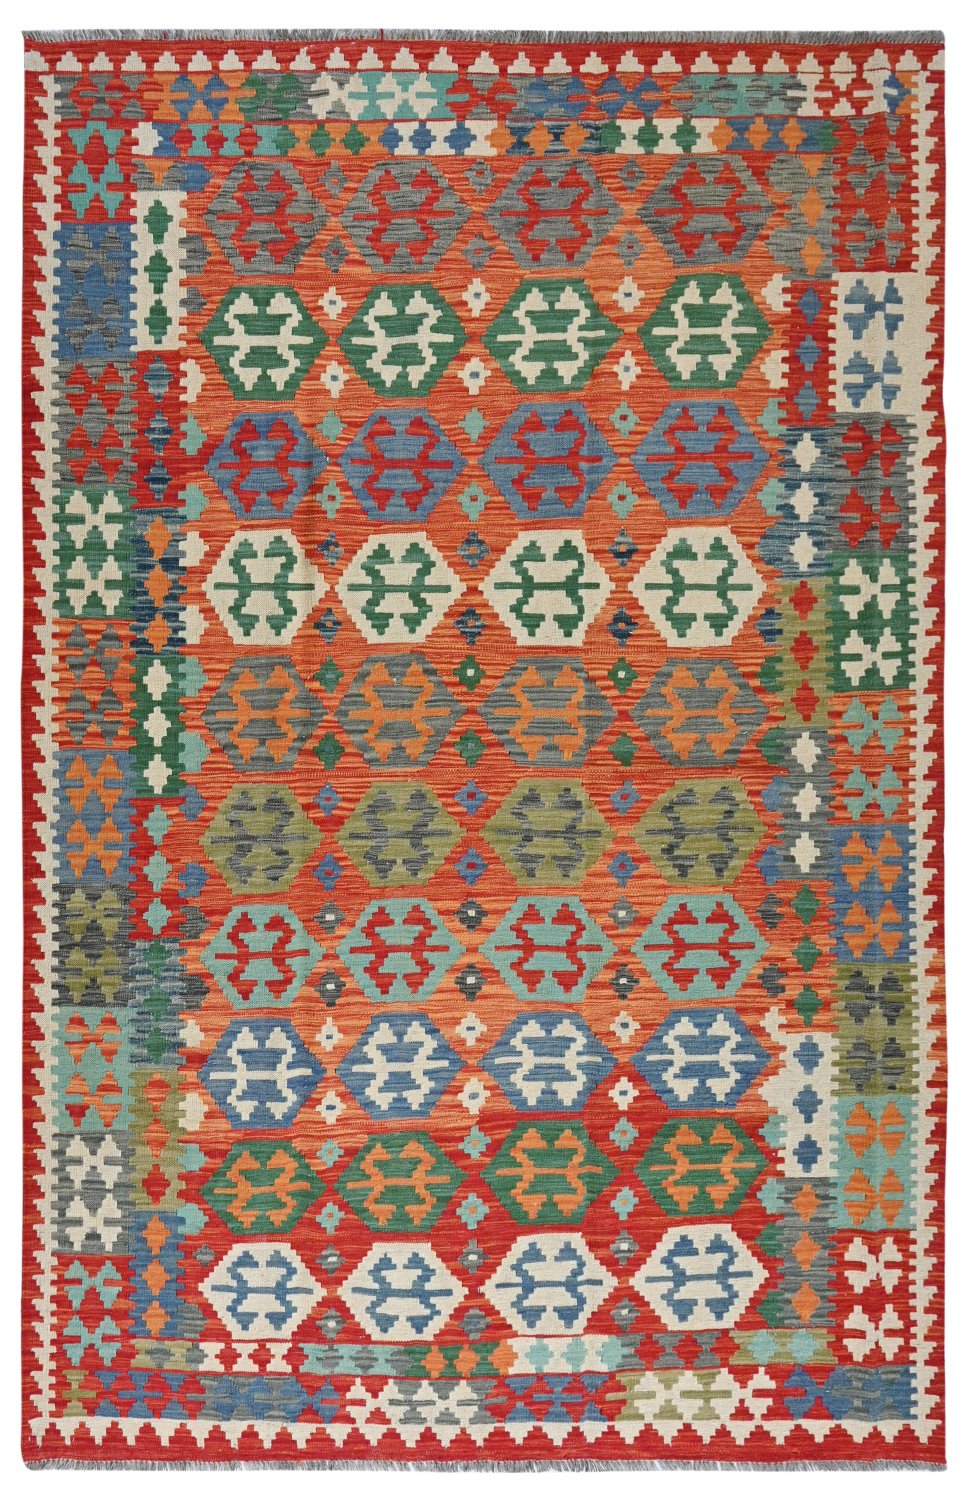 Kilim rug Afghan 297 x 198 cm